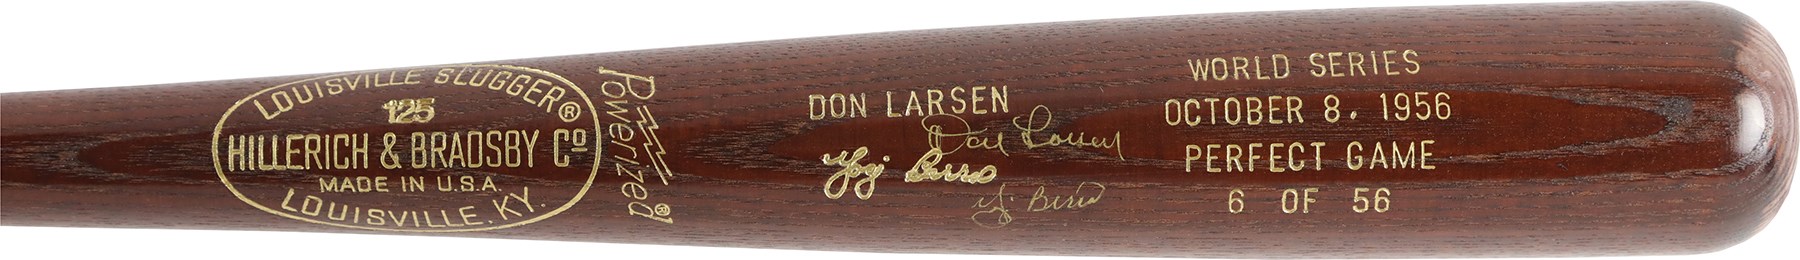 Baseball Autographs - Don Larsen, Yogi Berra Signed Louisville Slugger Perfect Game Bat 6 of 58 (PSA)